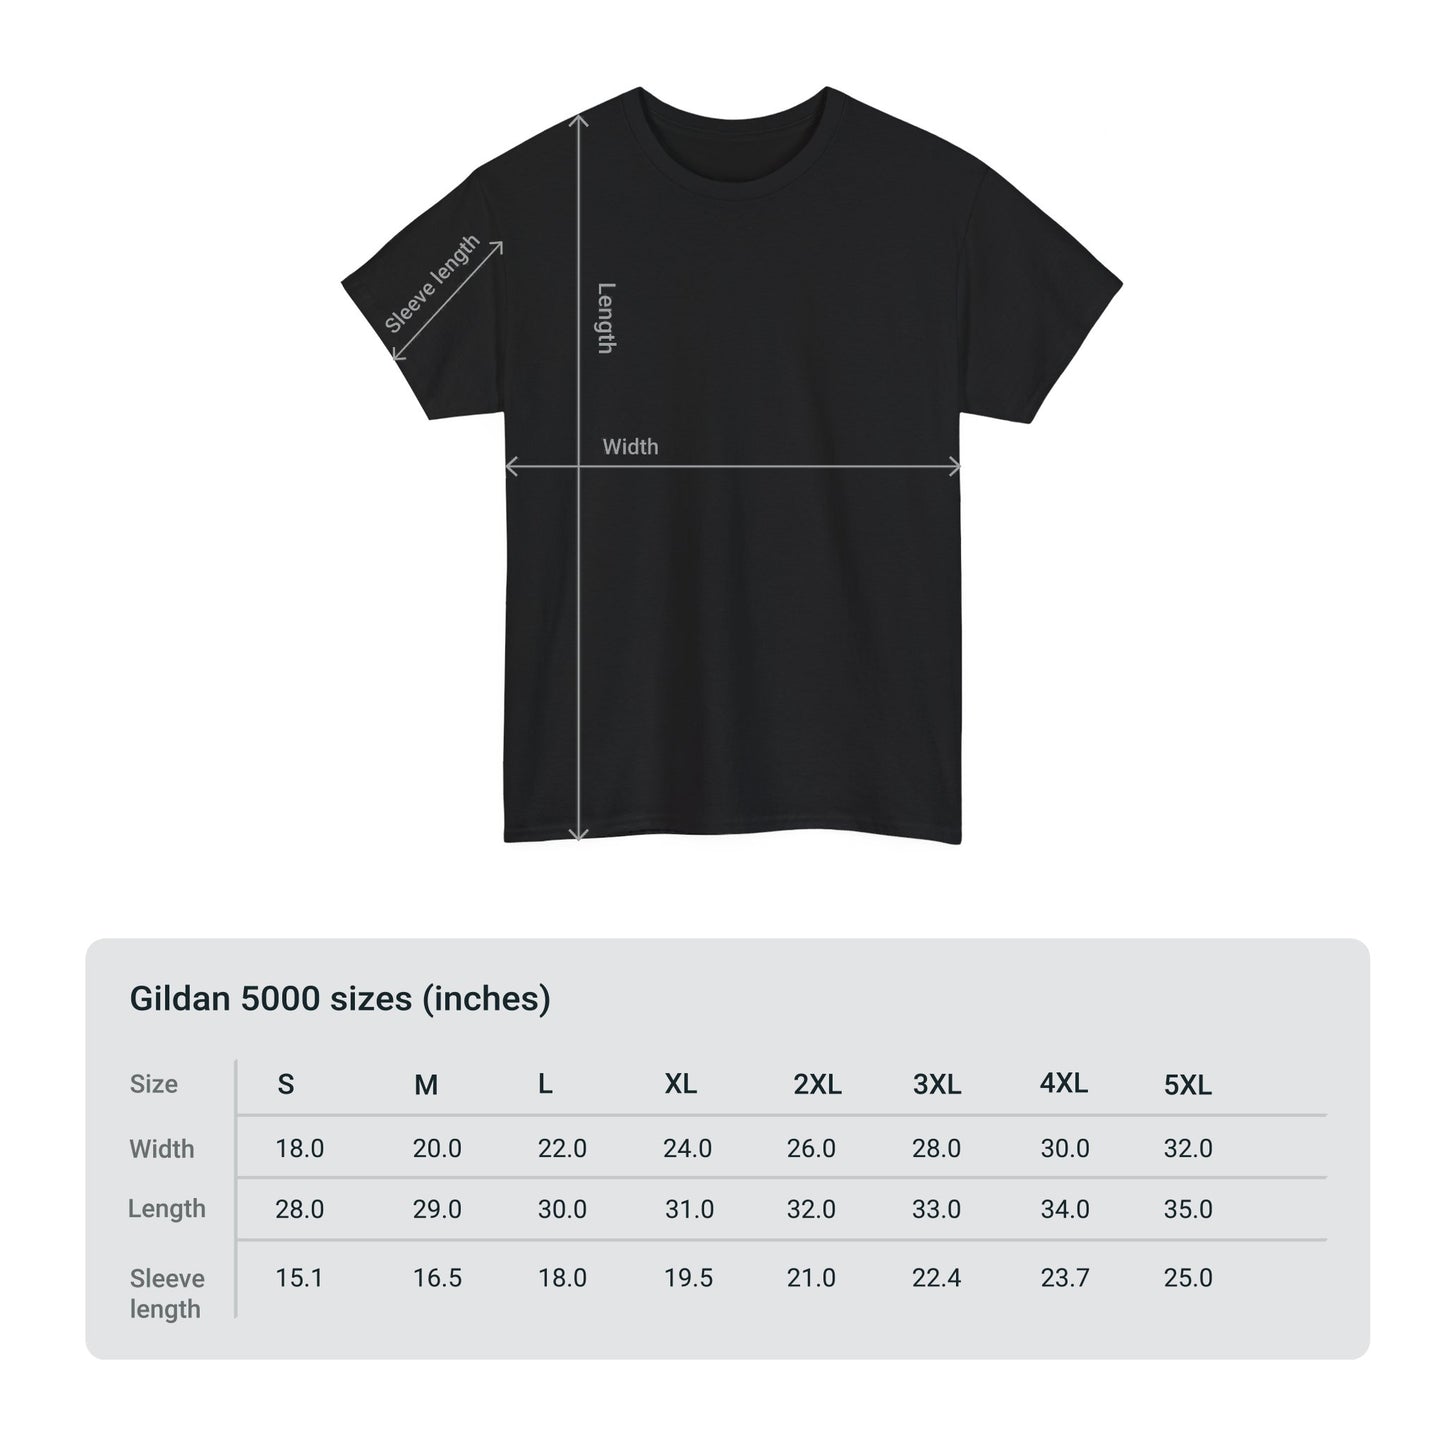 AC/DC High Quality Printed Unisex Heavy Cotton T-shirt